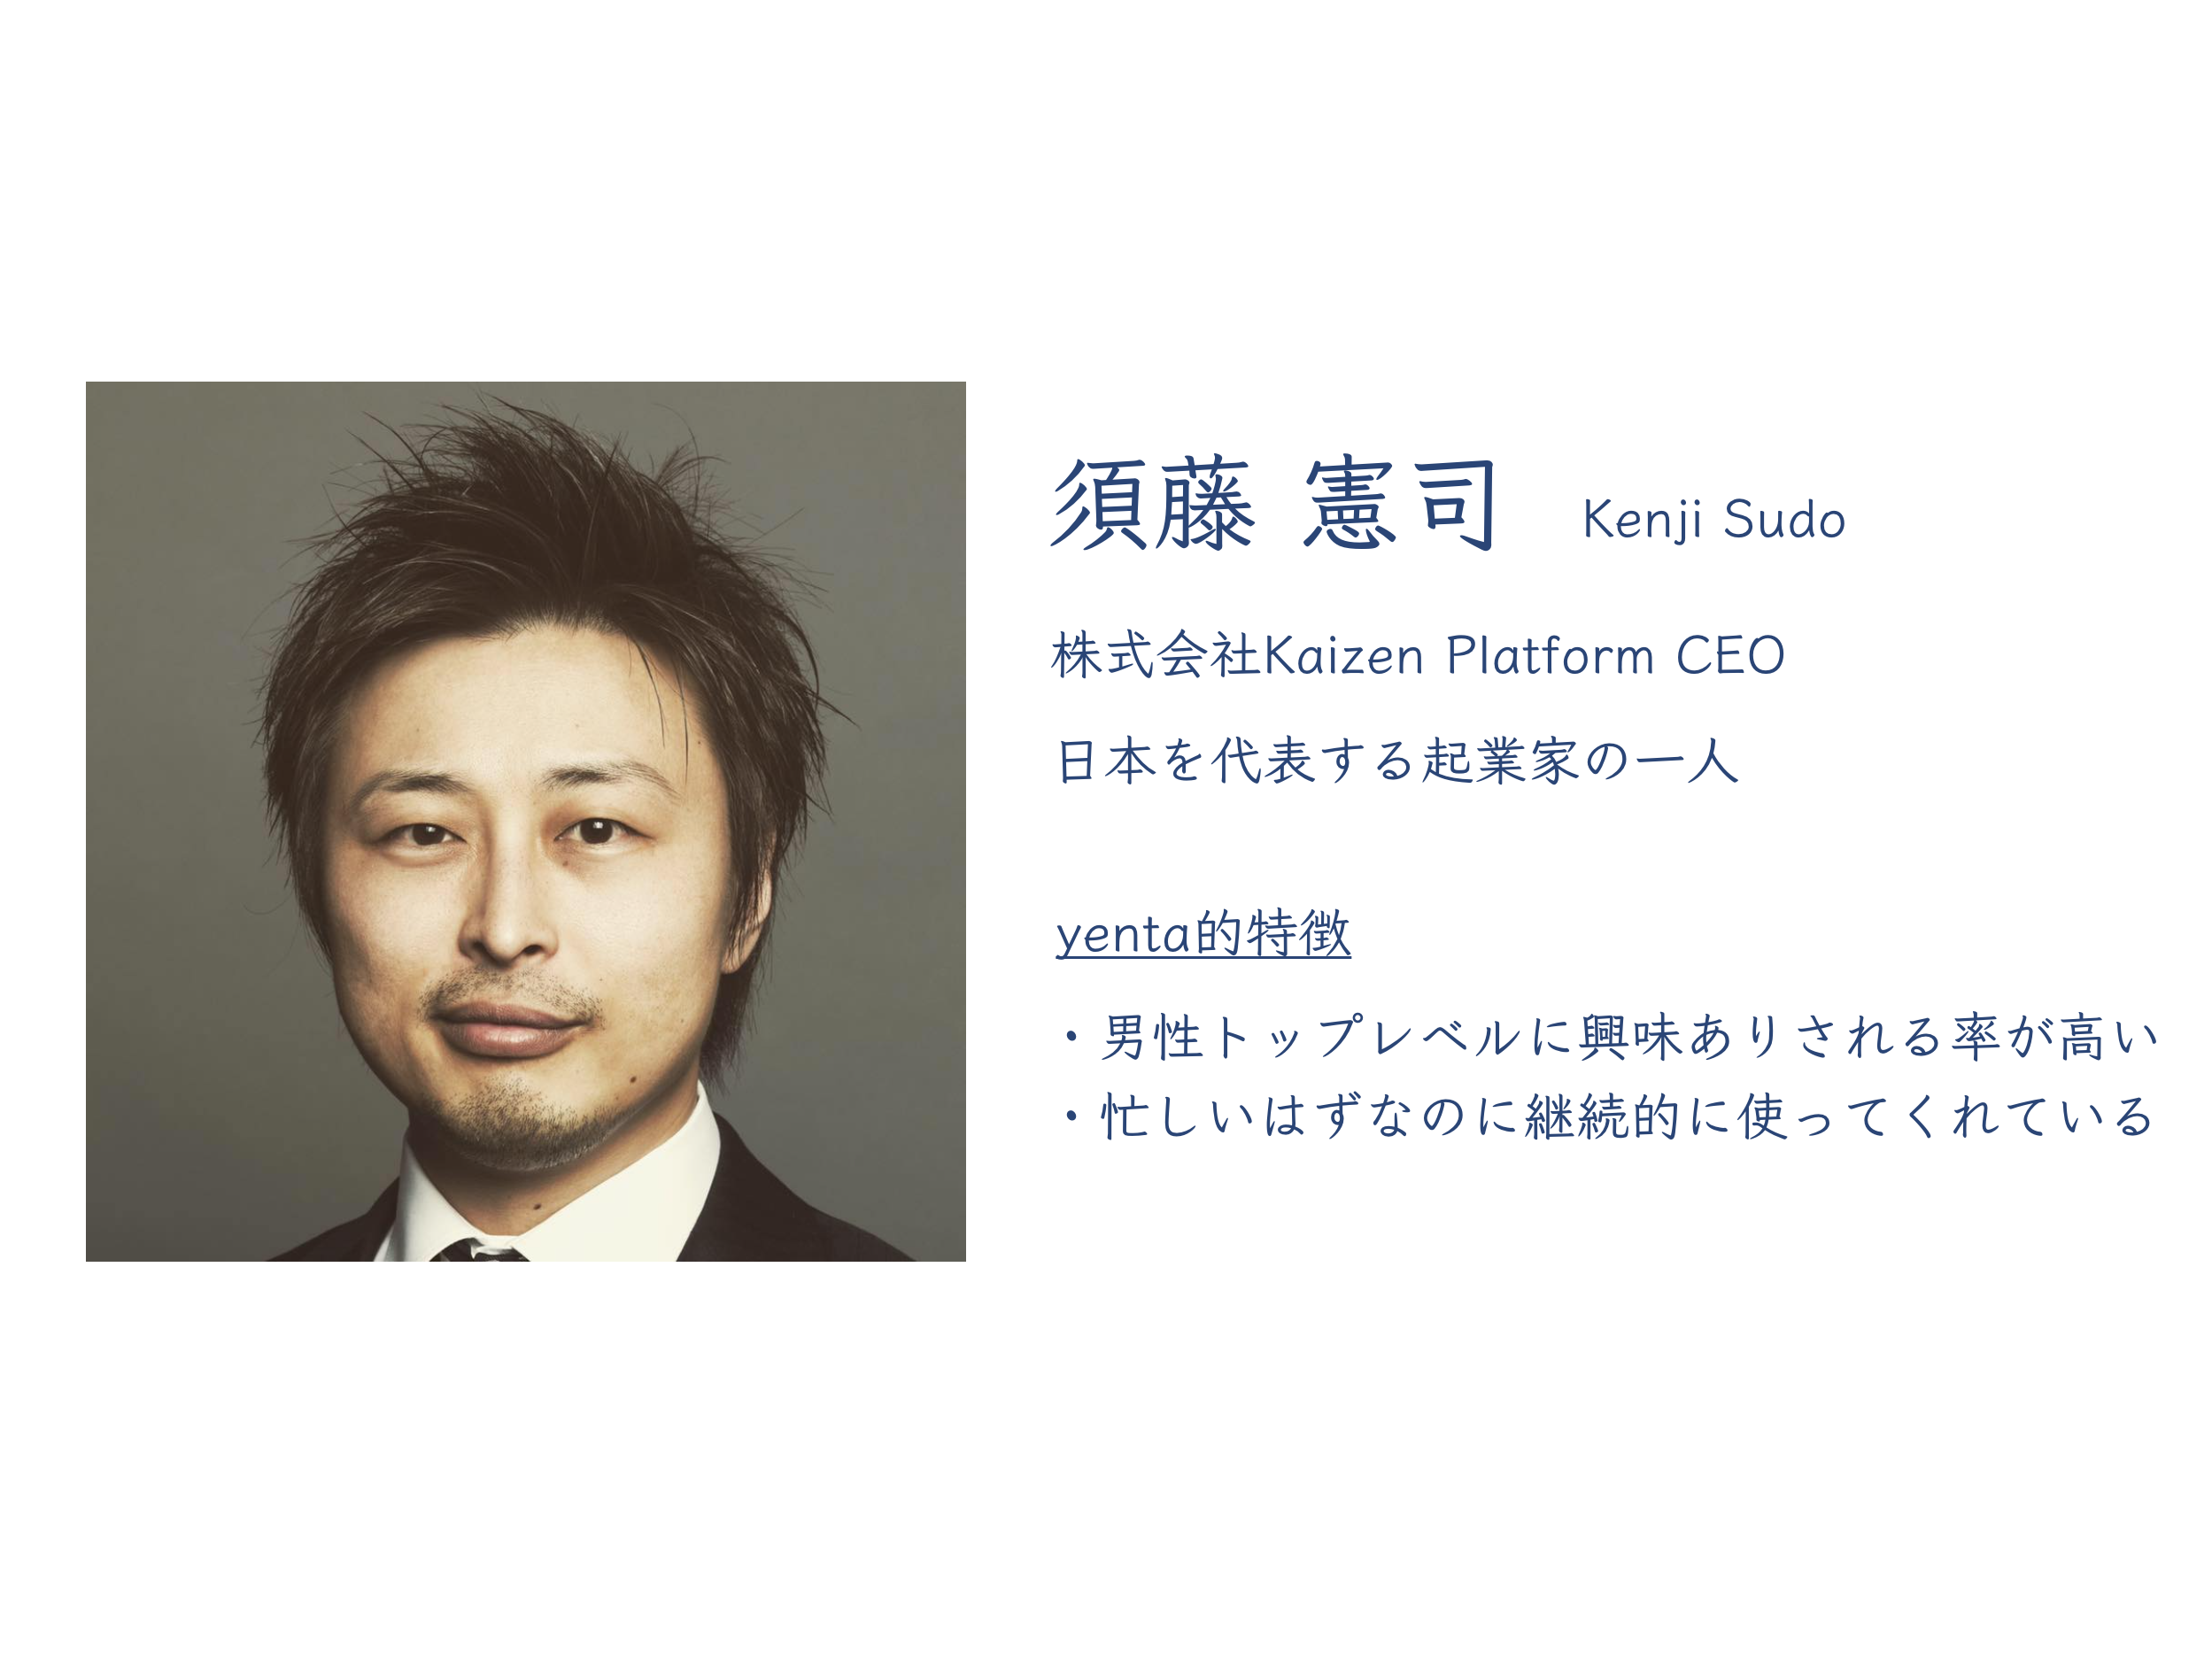 kaizen platform CEO 須藤憲司さん